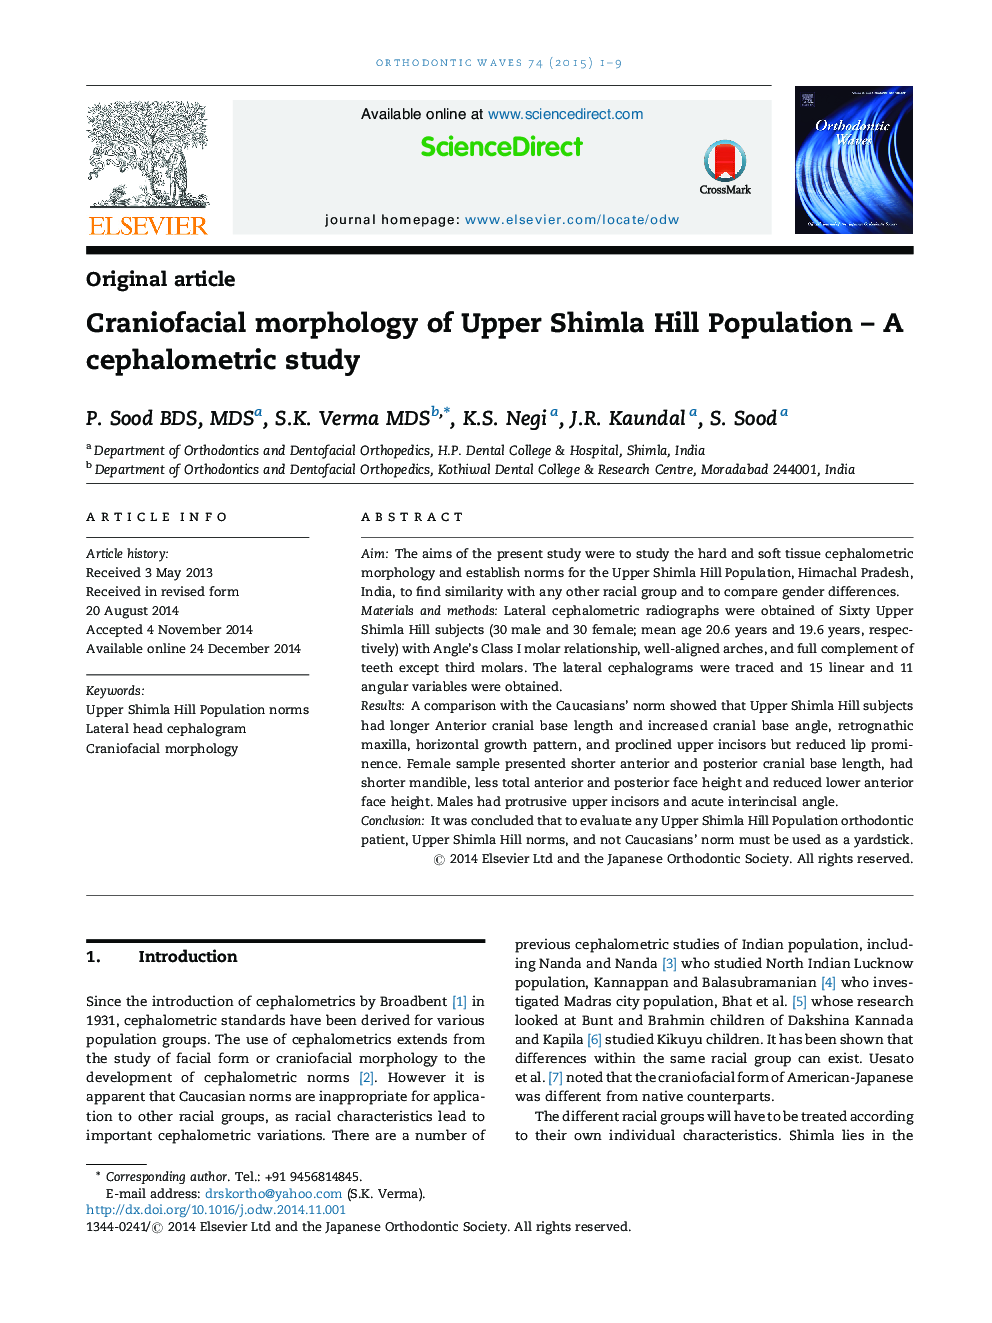 Craniofacial morphology of Upper Shimla Hill Population – A cephalometric study